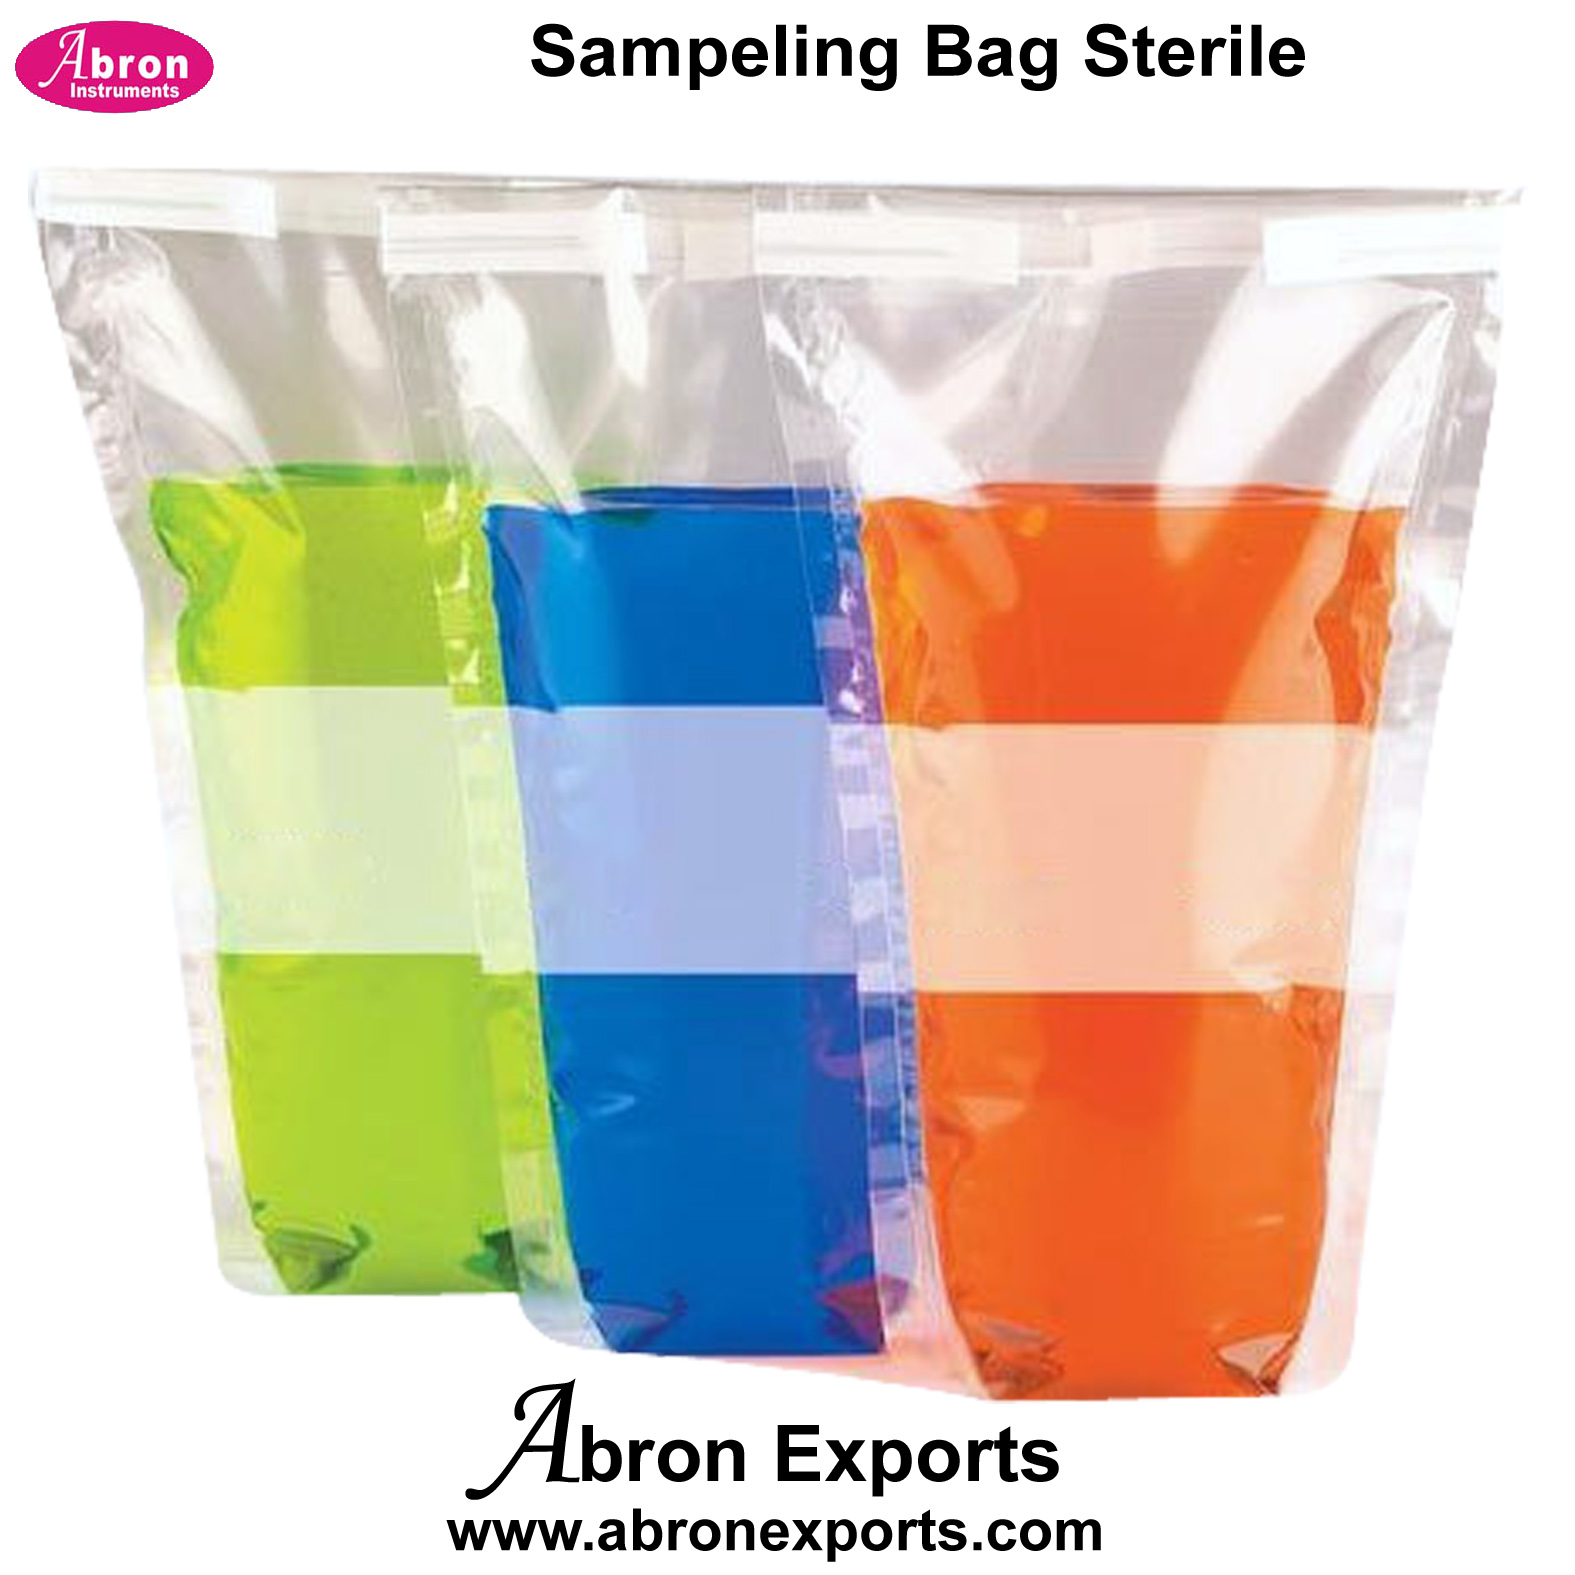 Hospital Disposable Bags laboratory sterile bag sample 100 pc Collection Surgical Nursing Home Abron ABM-2425B5H 